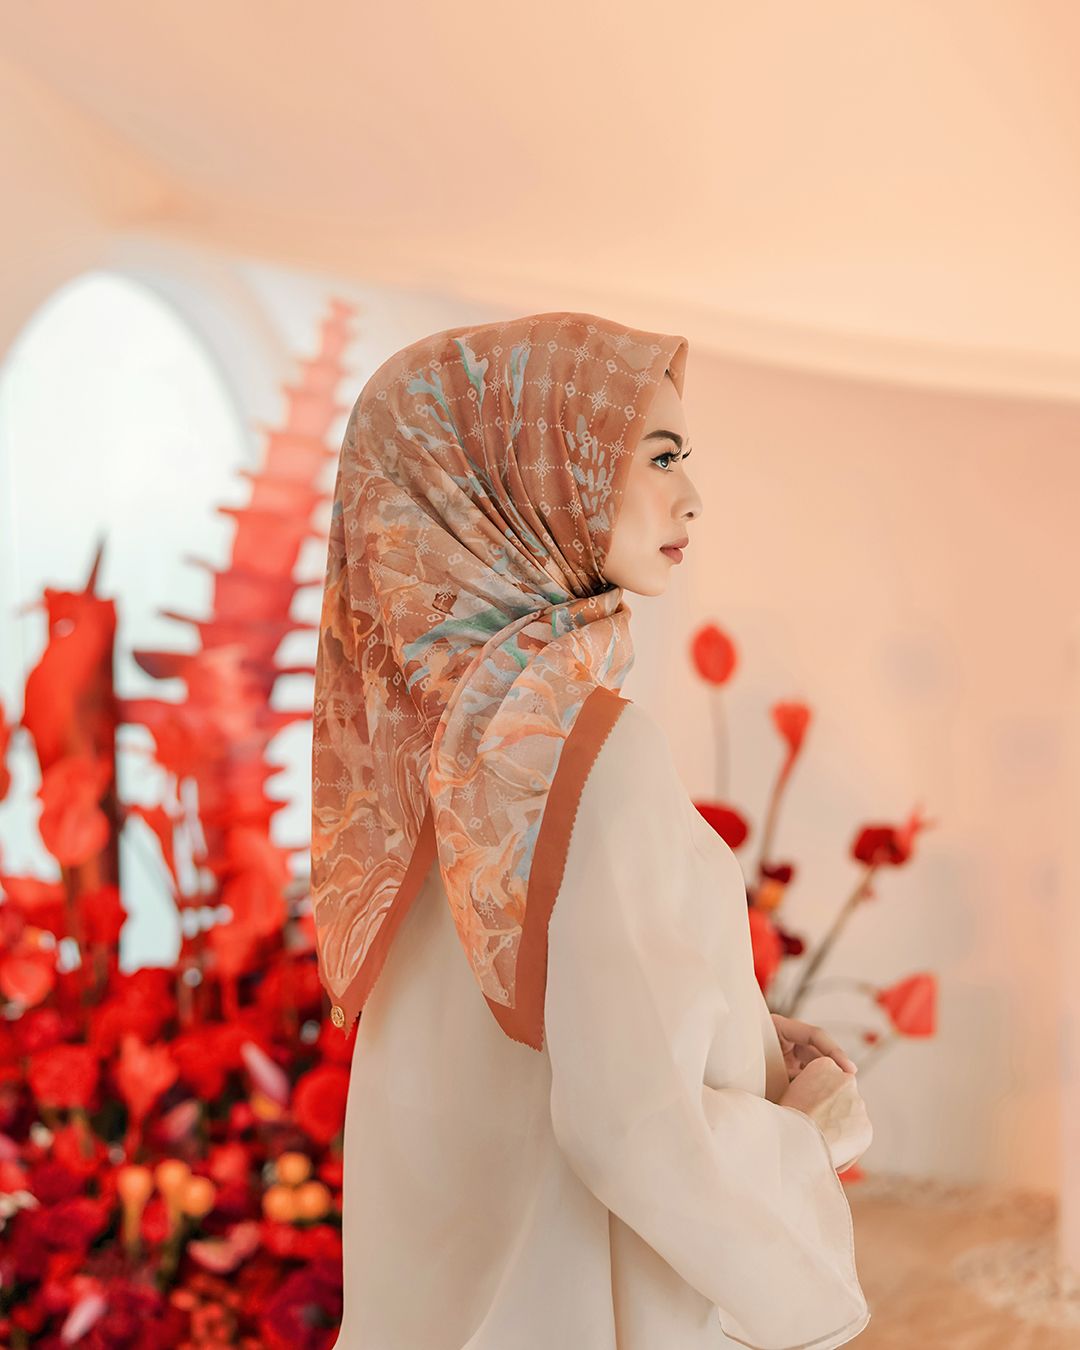 Kolaborasi Buttonscarves & RiaMiranda Luncurkan Koleksi Hijab Elegan